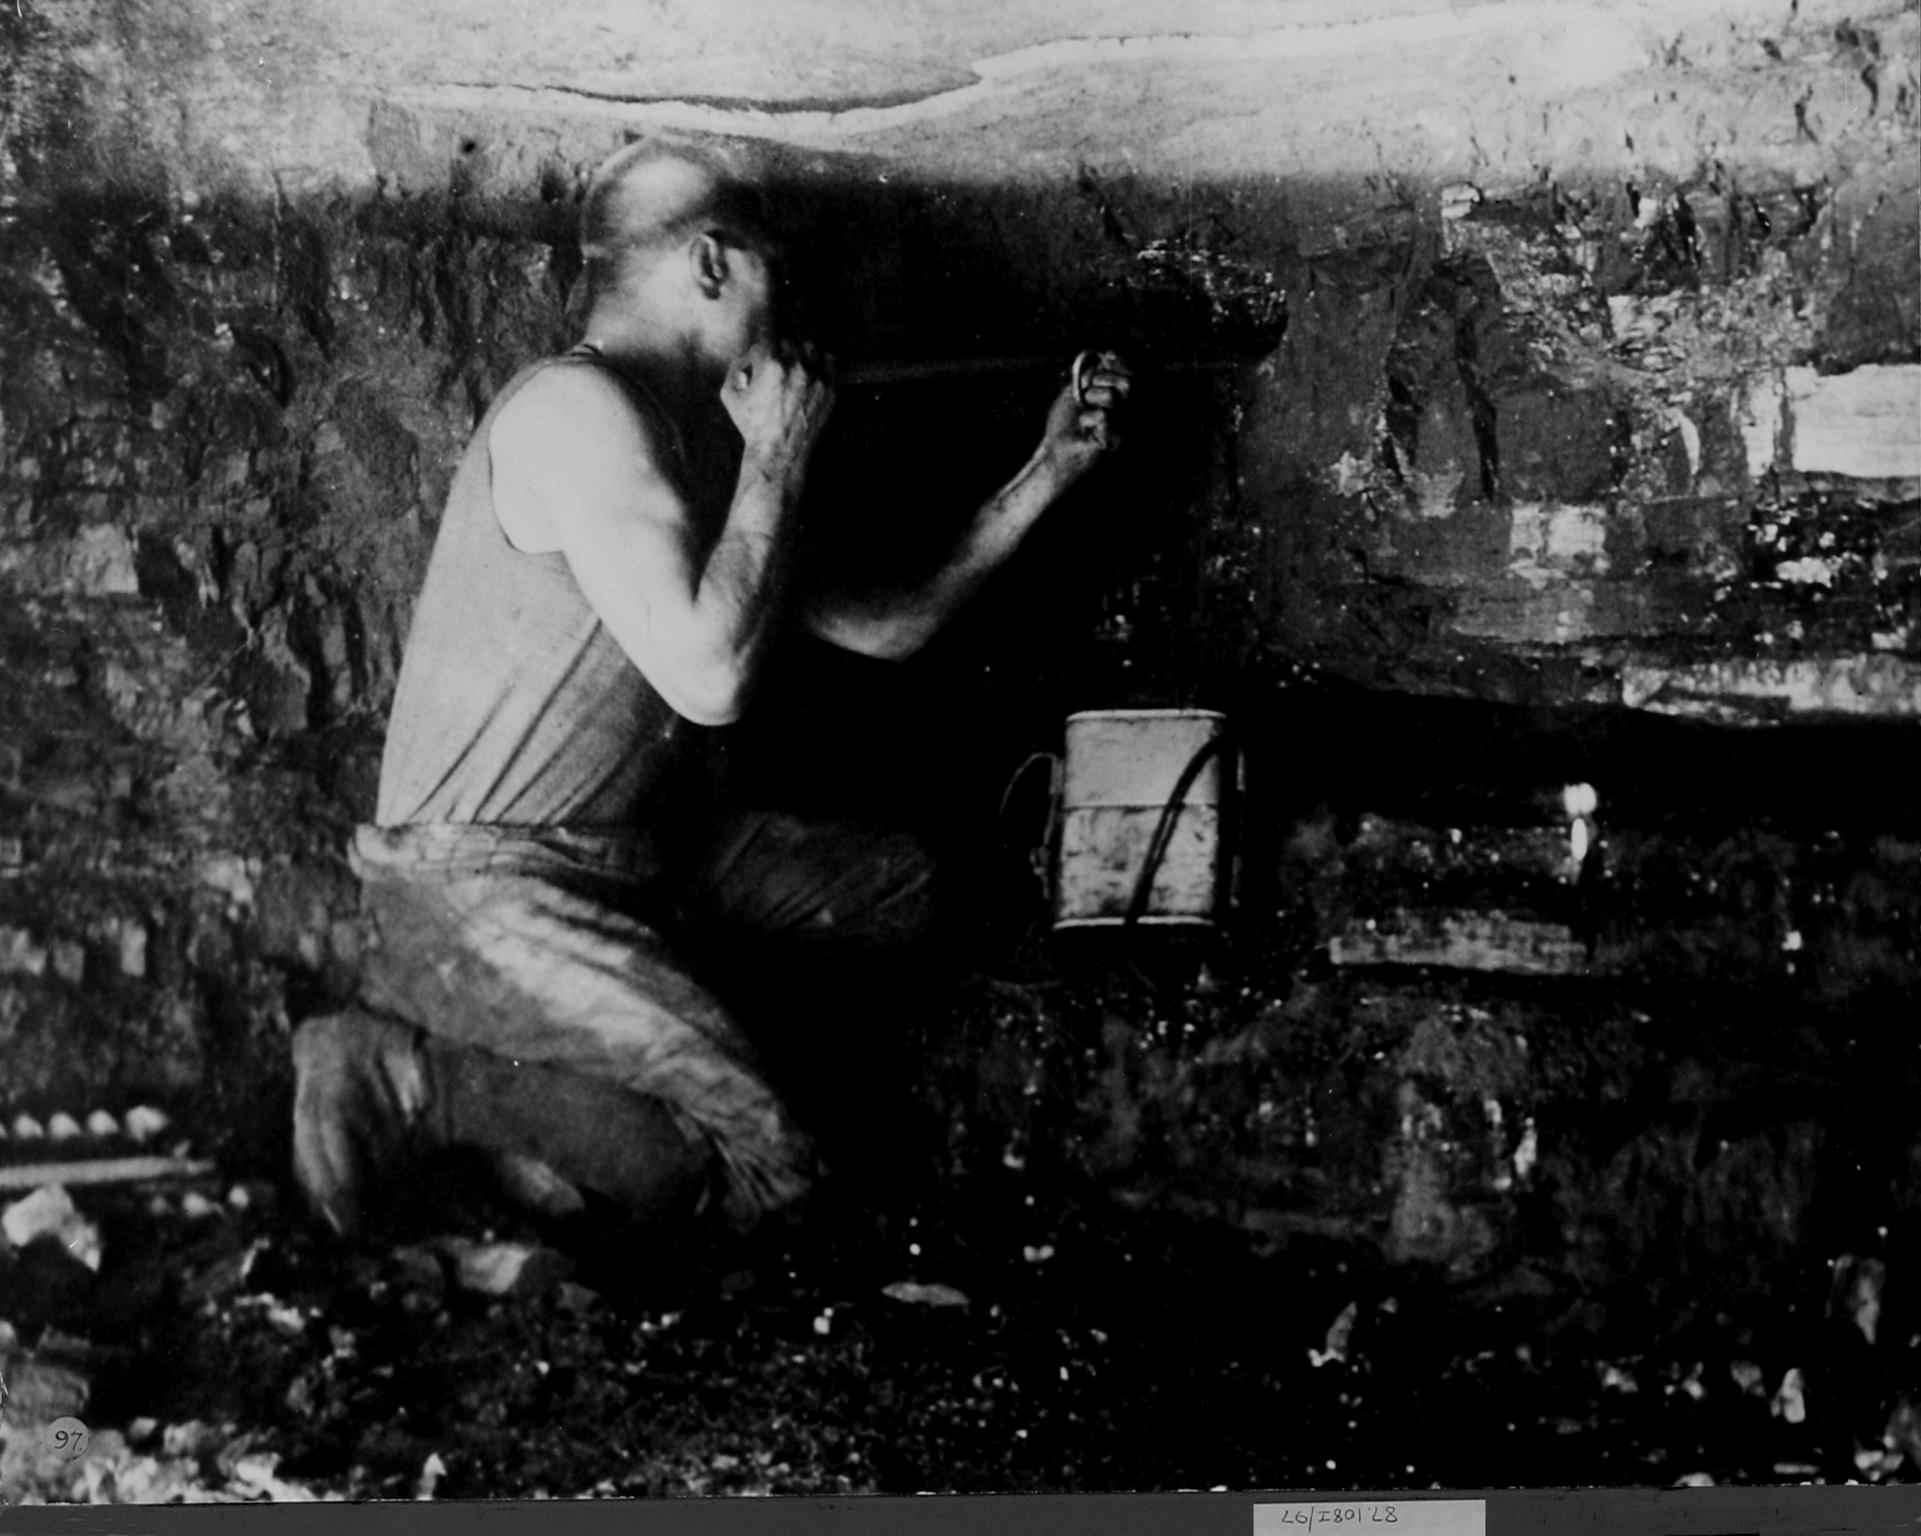 Coal miner, photograph